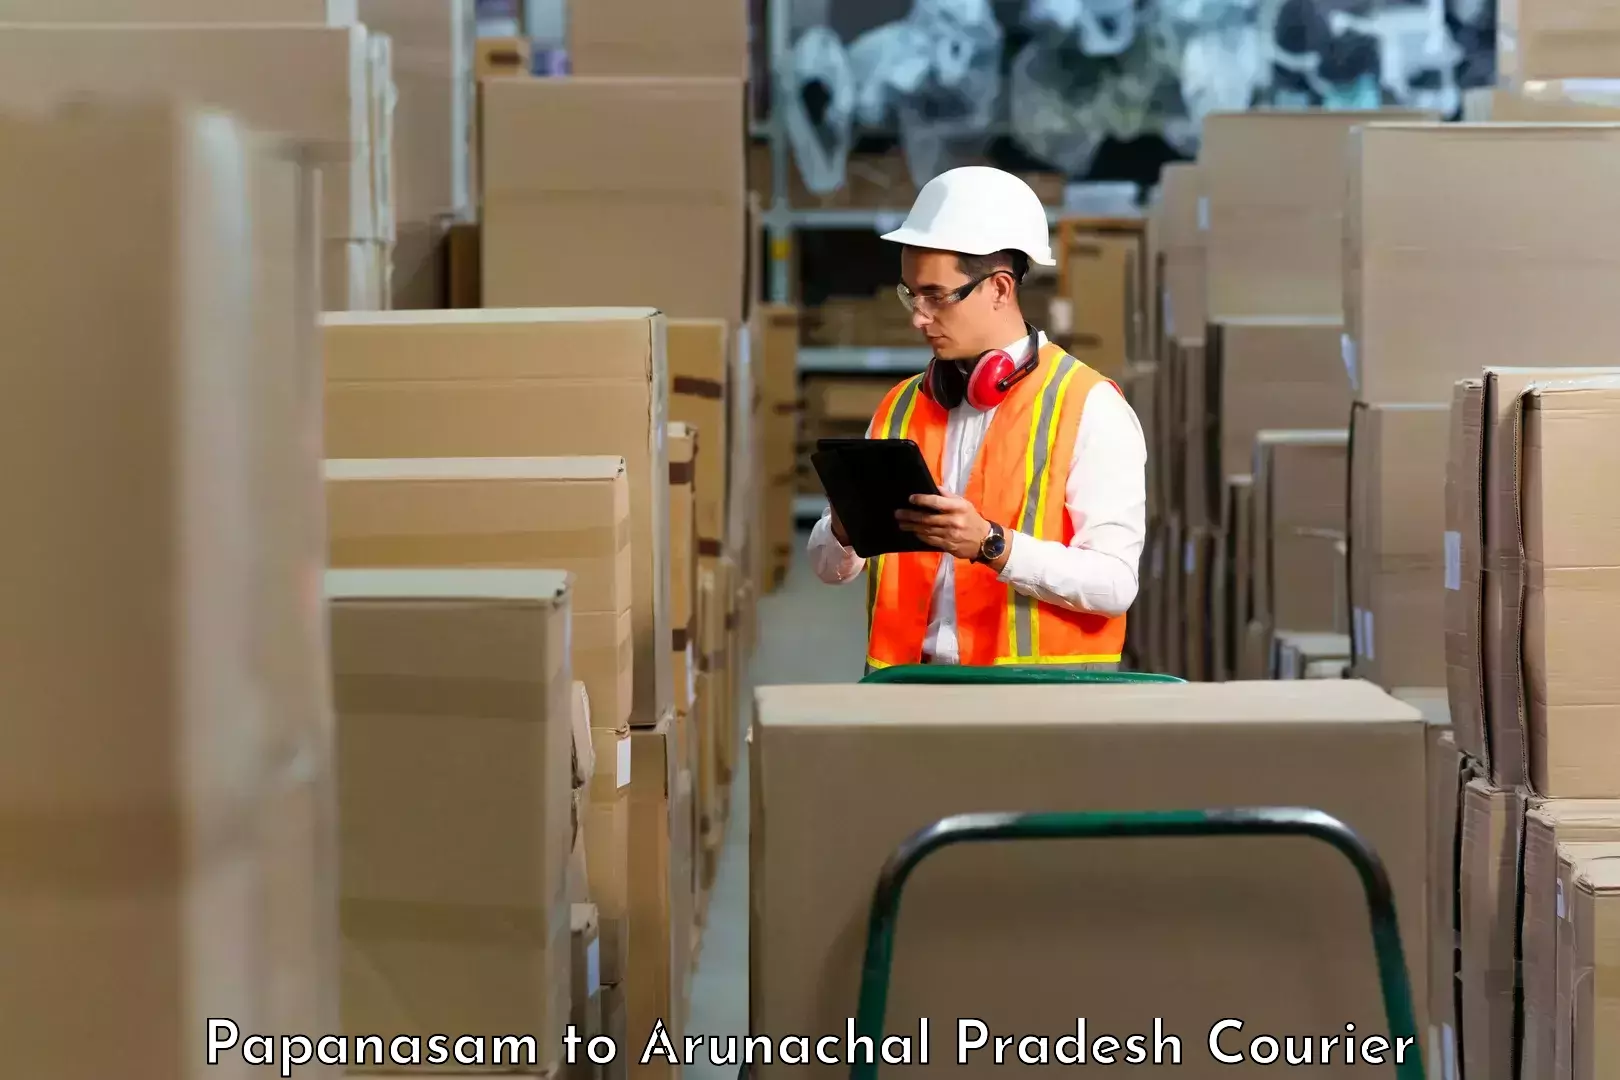 Full-service courier options Papanasam to Arunachal Pradesh